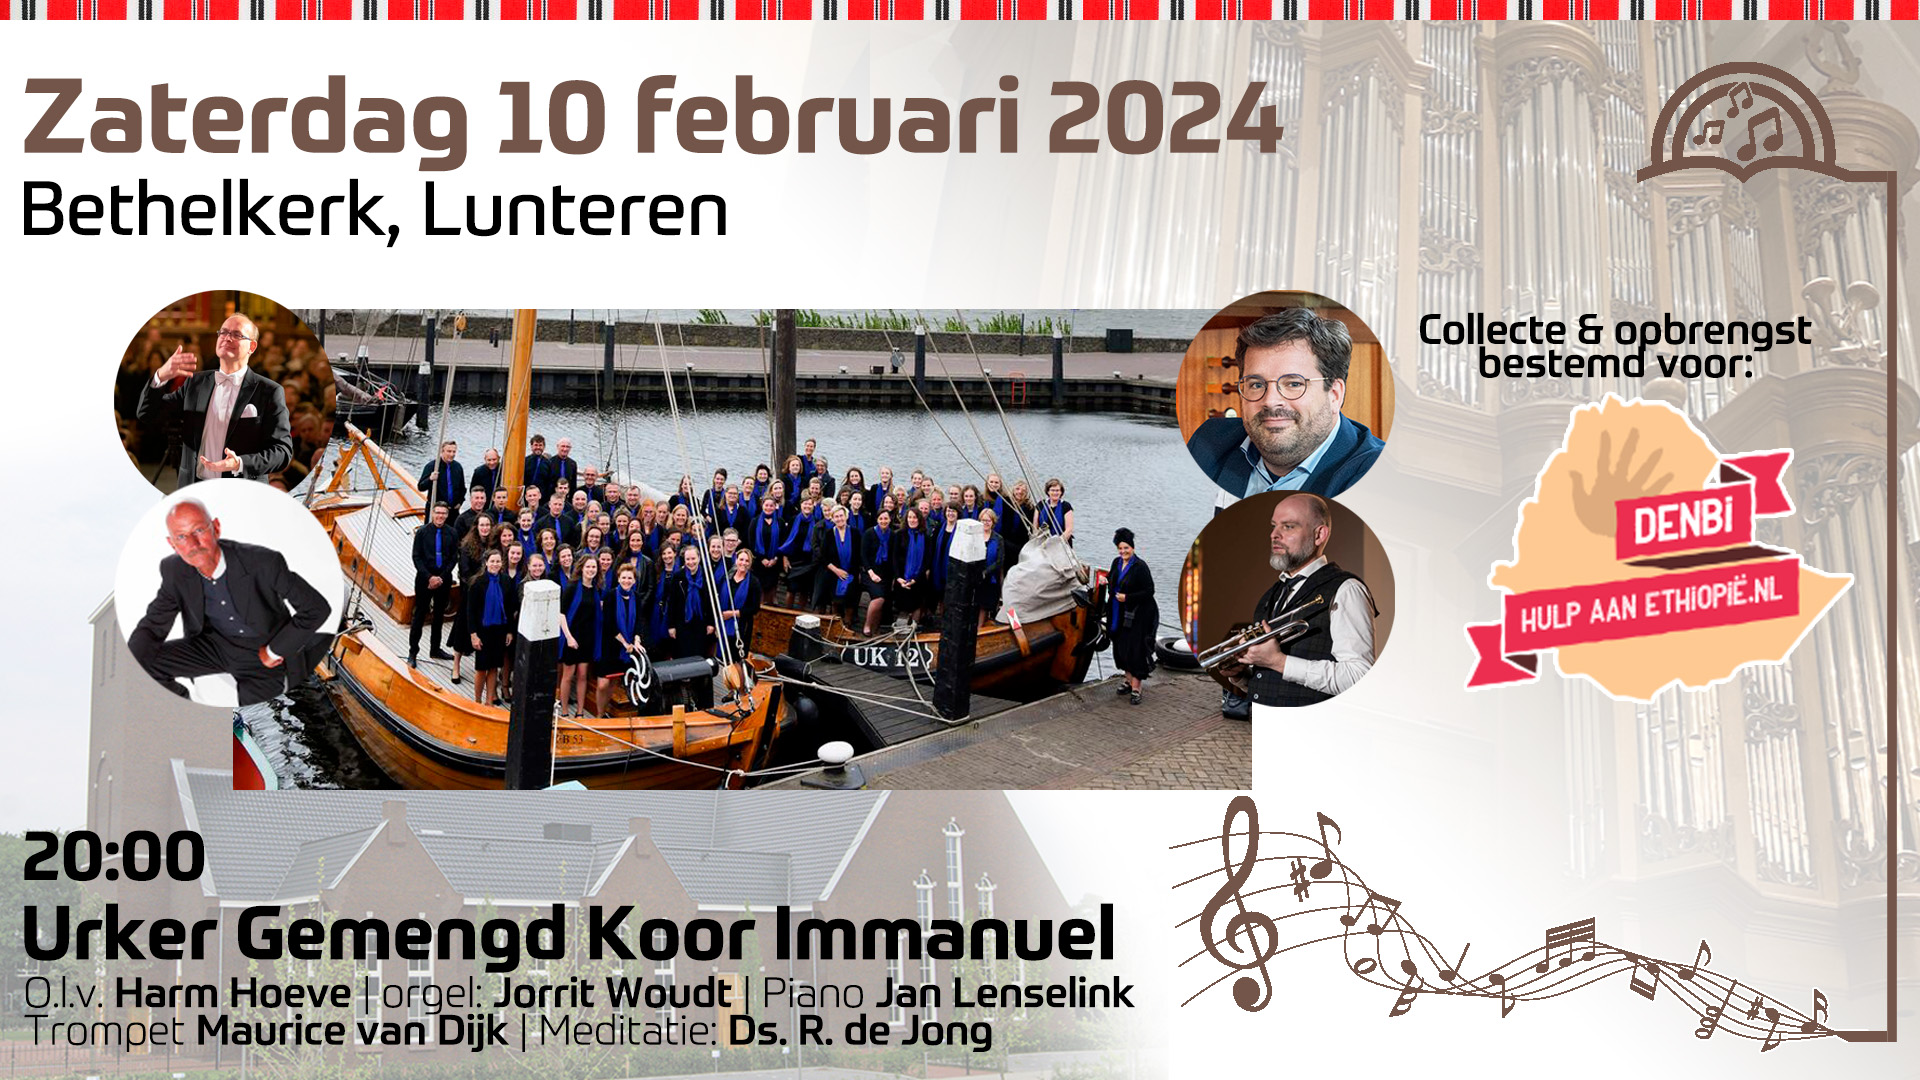 Concert Bethelkerk Lunteren Stichting Denbi Urker Gemengd Koor Immanuel